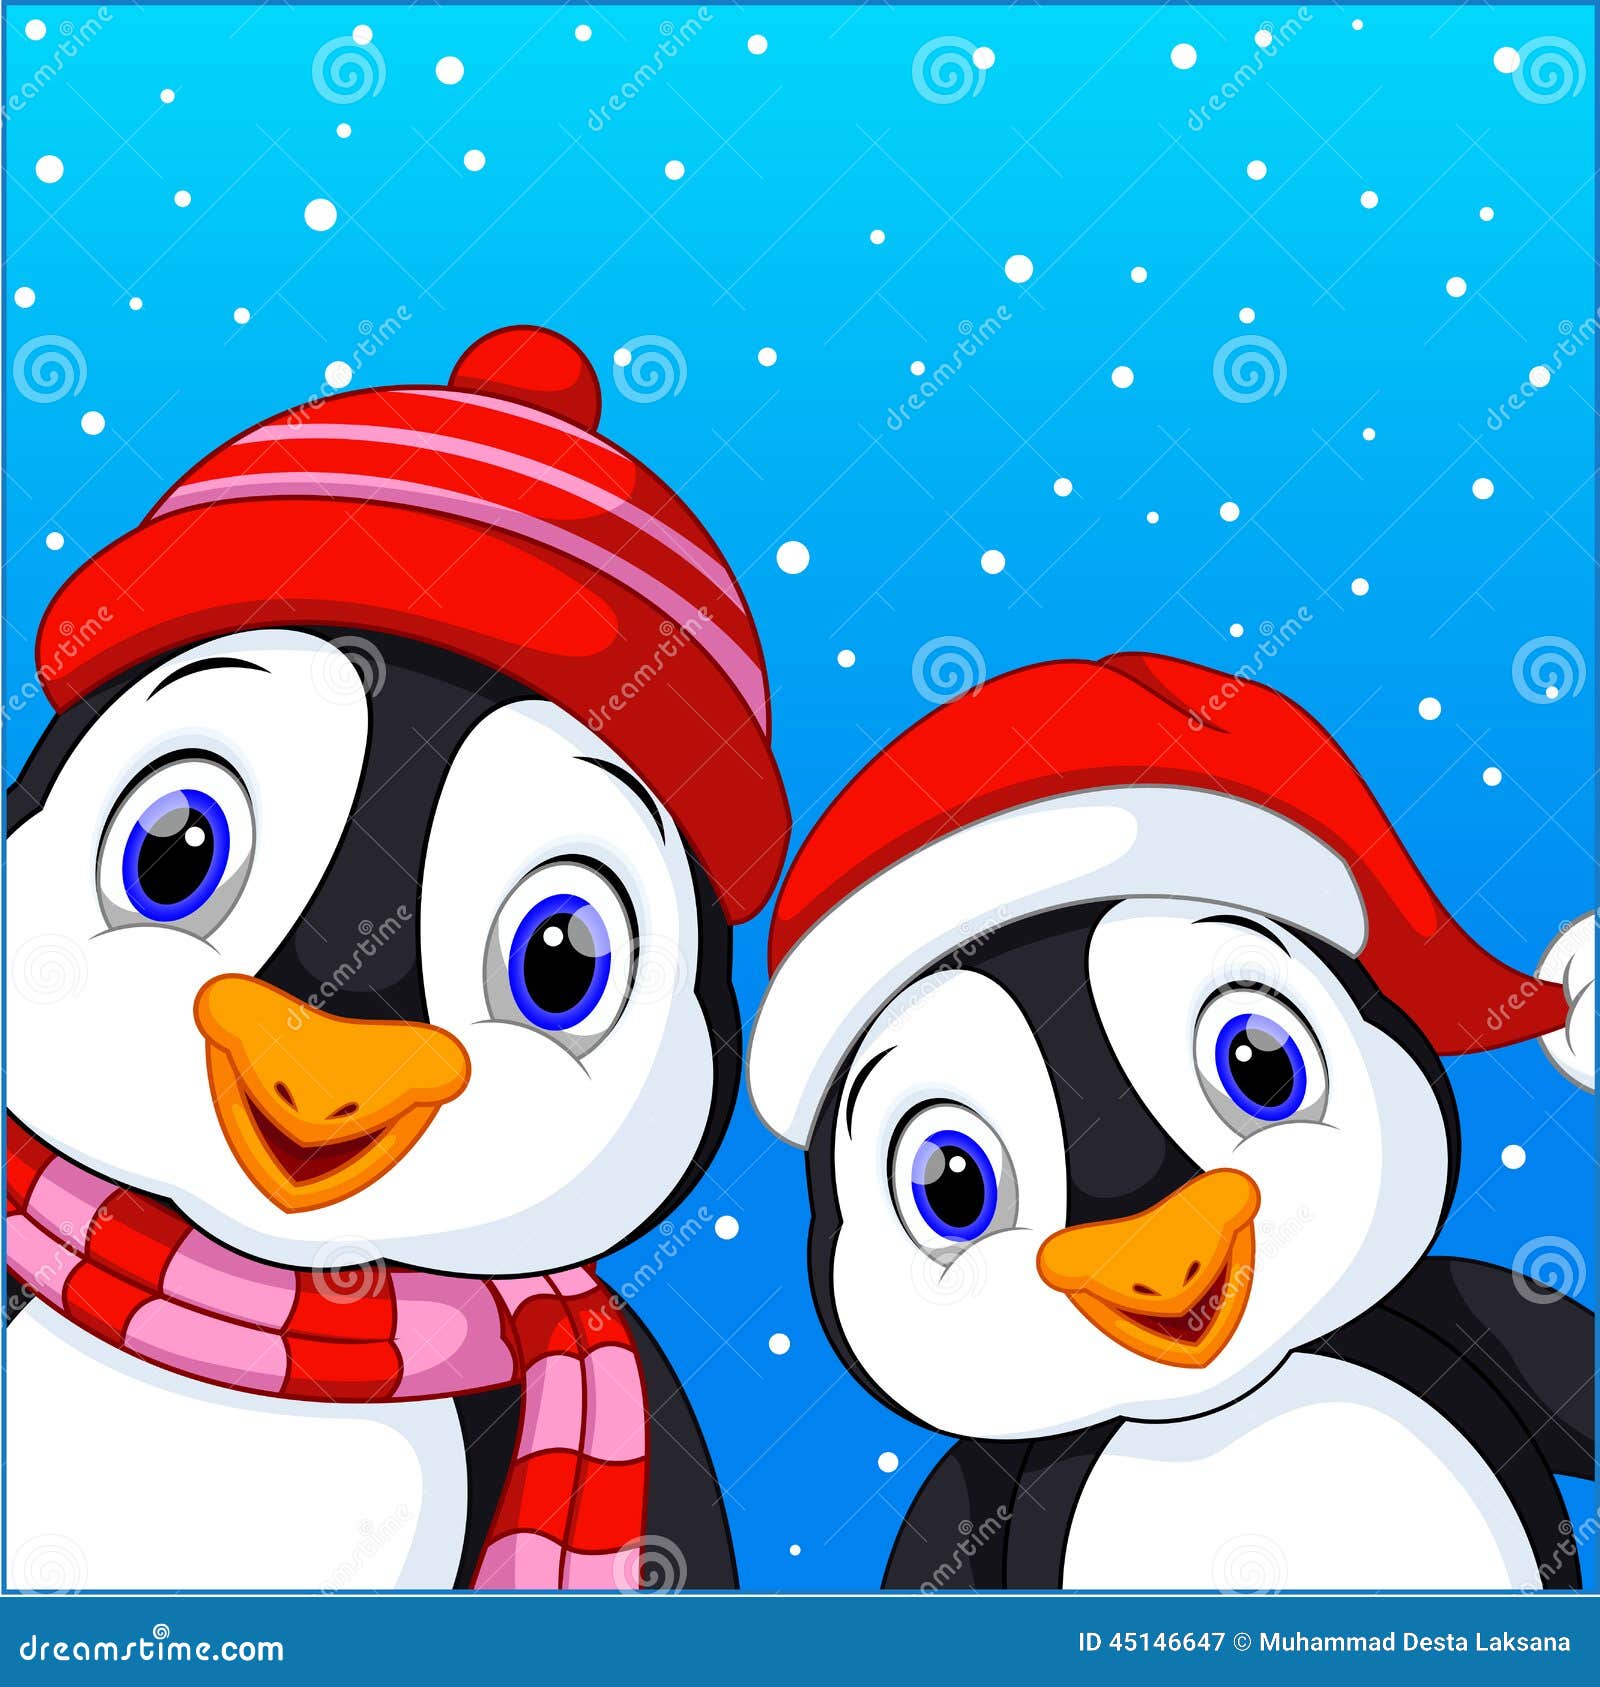 Cute Penguins Cartoon Stock Illustration - Image: 45146647
 Cute Winter Penguin Wallpaper